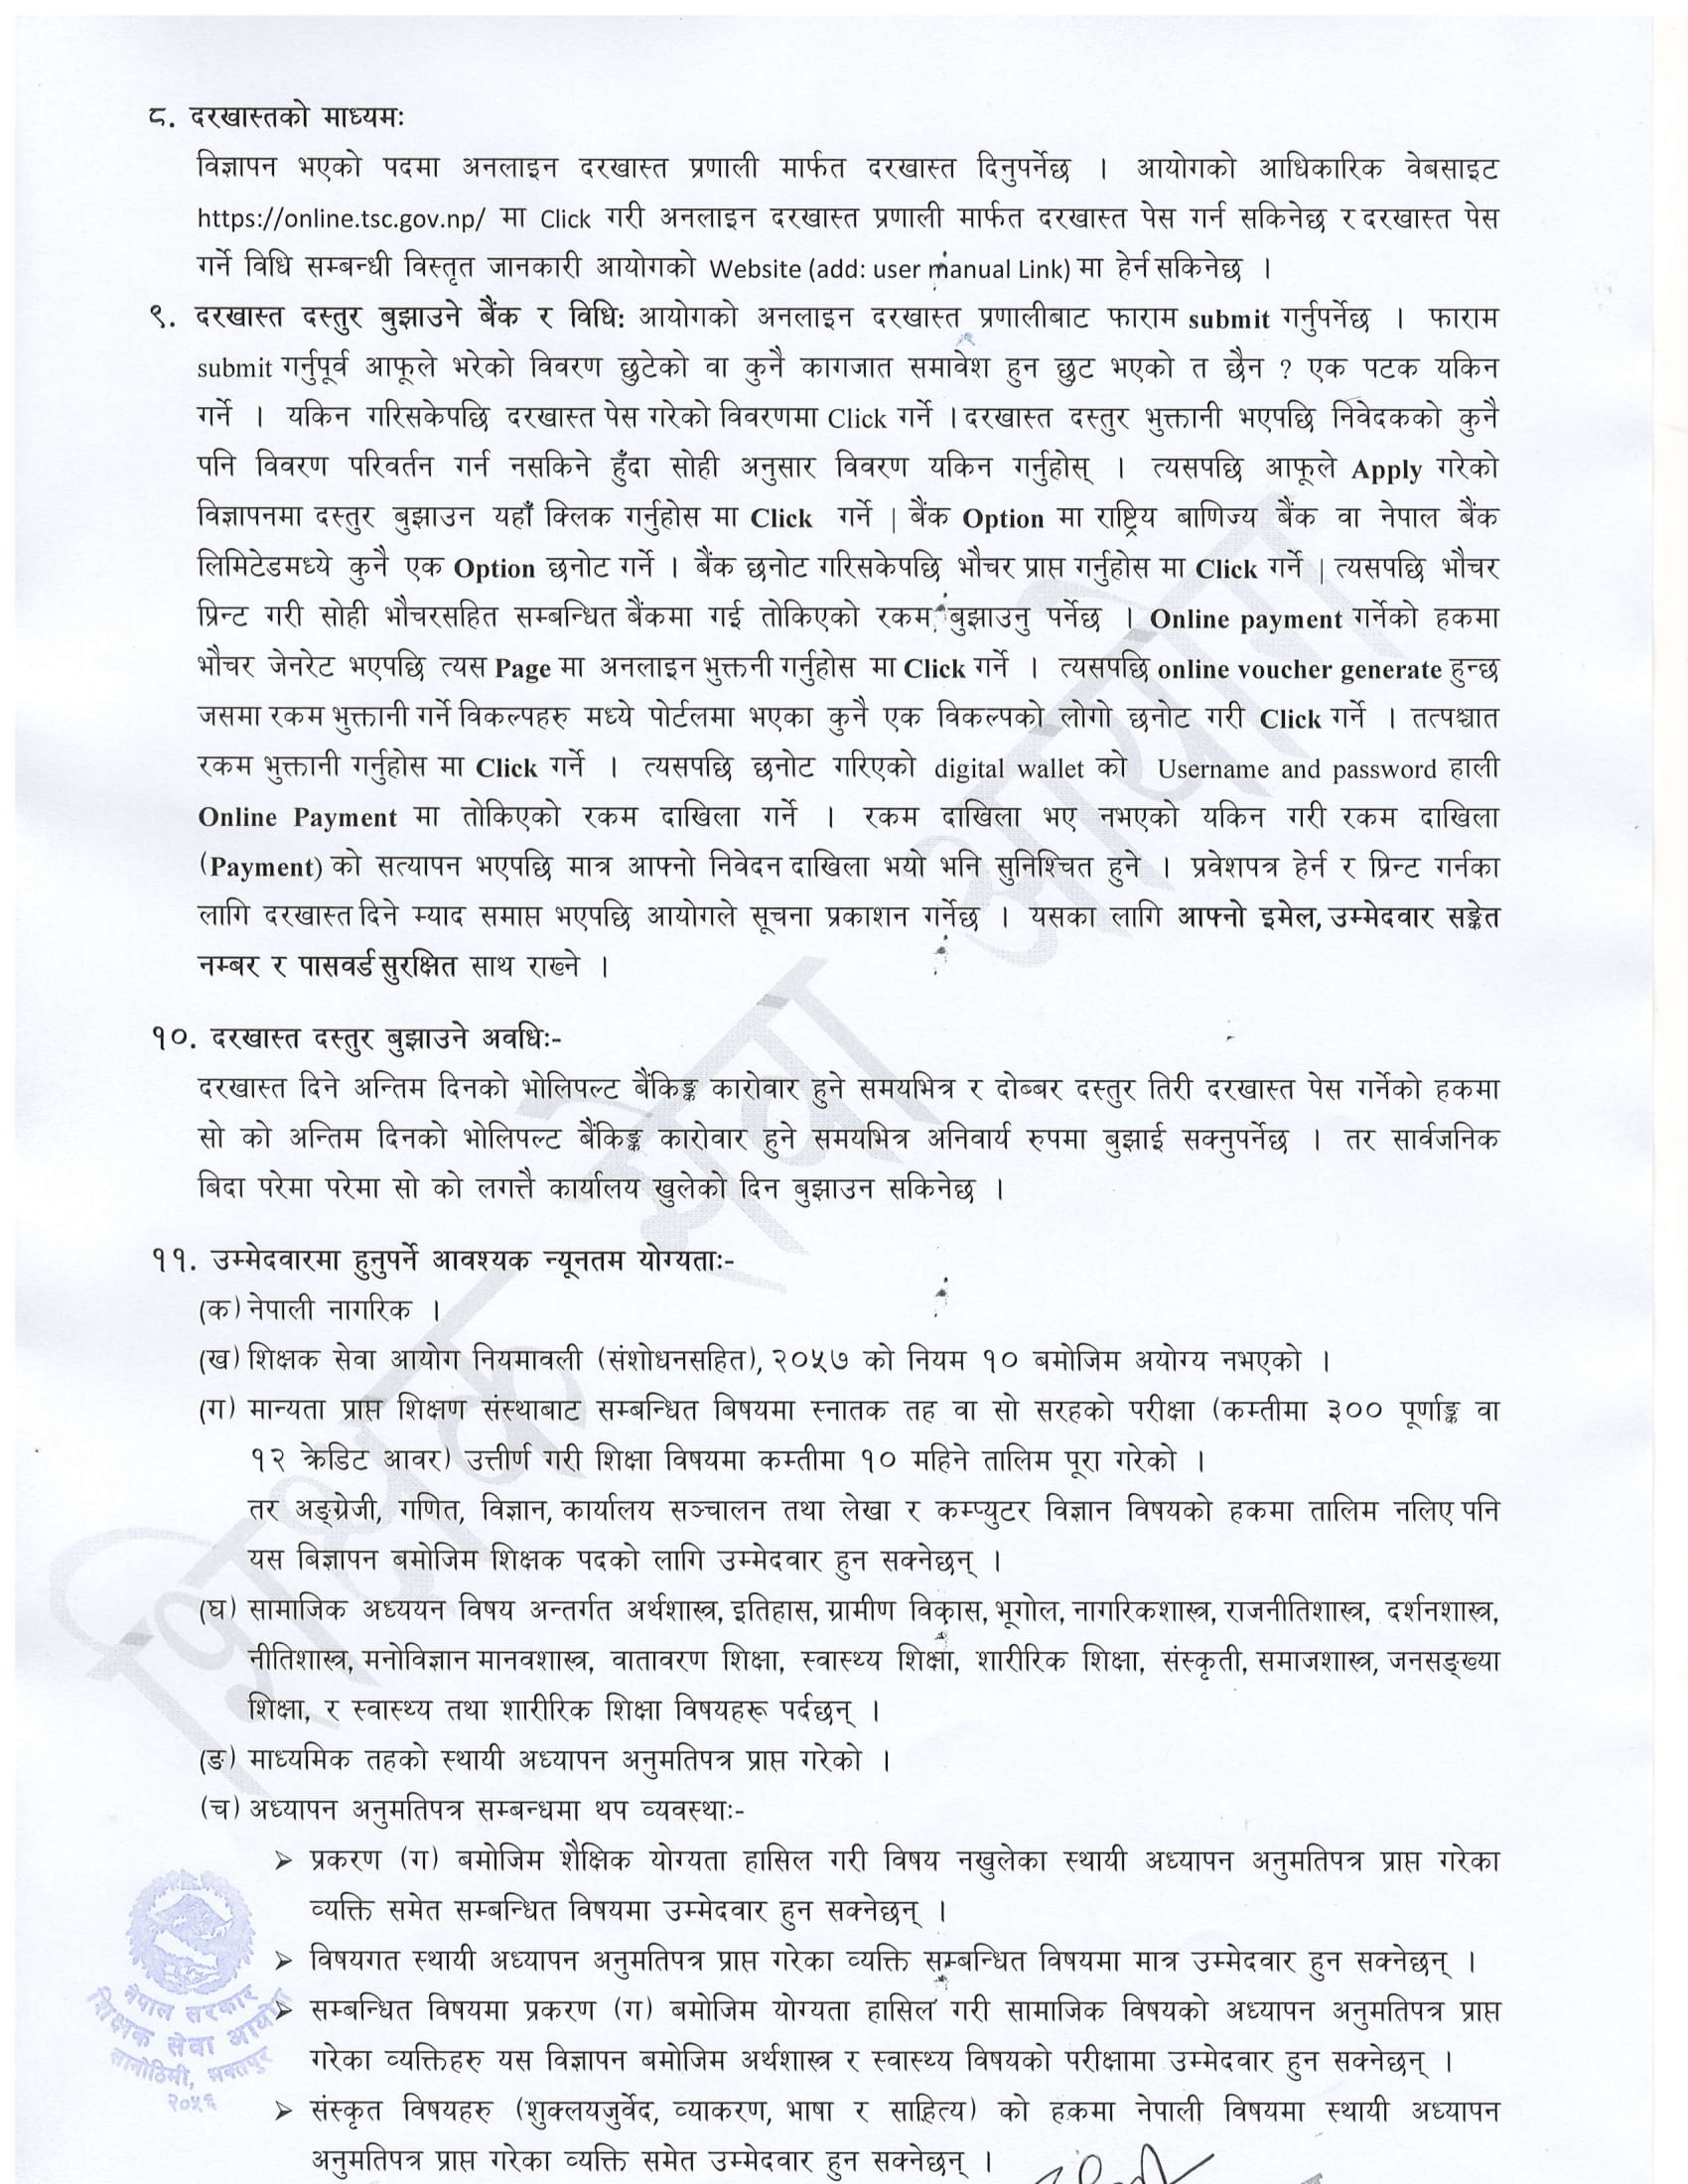 Shikshak Sewa Aayog Secondary Level Bigyapan 2079. Teachers Service Commission has Advertised for Secondary Level Teachers